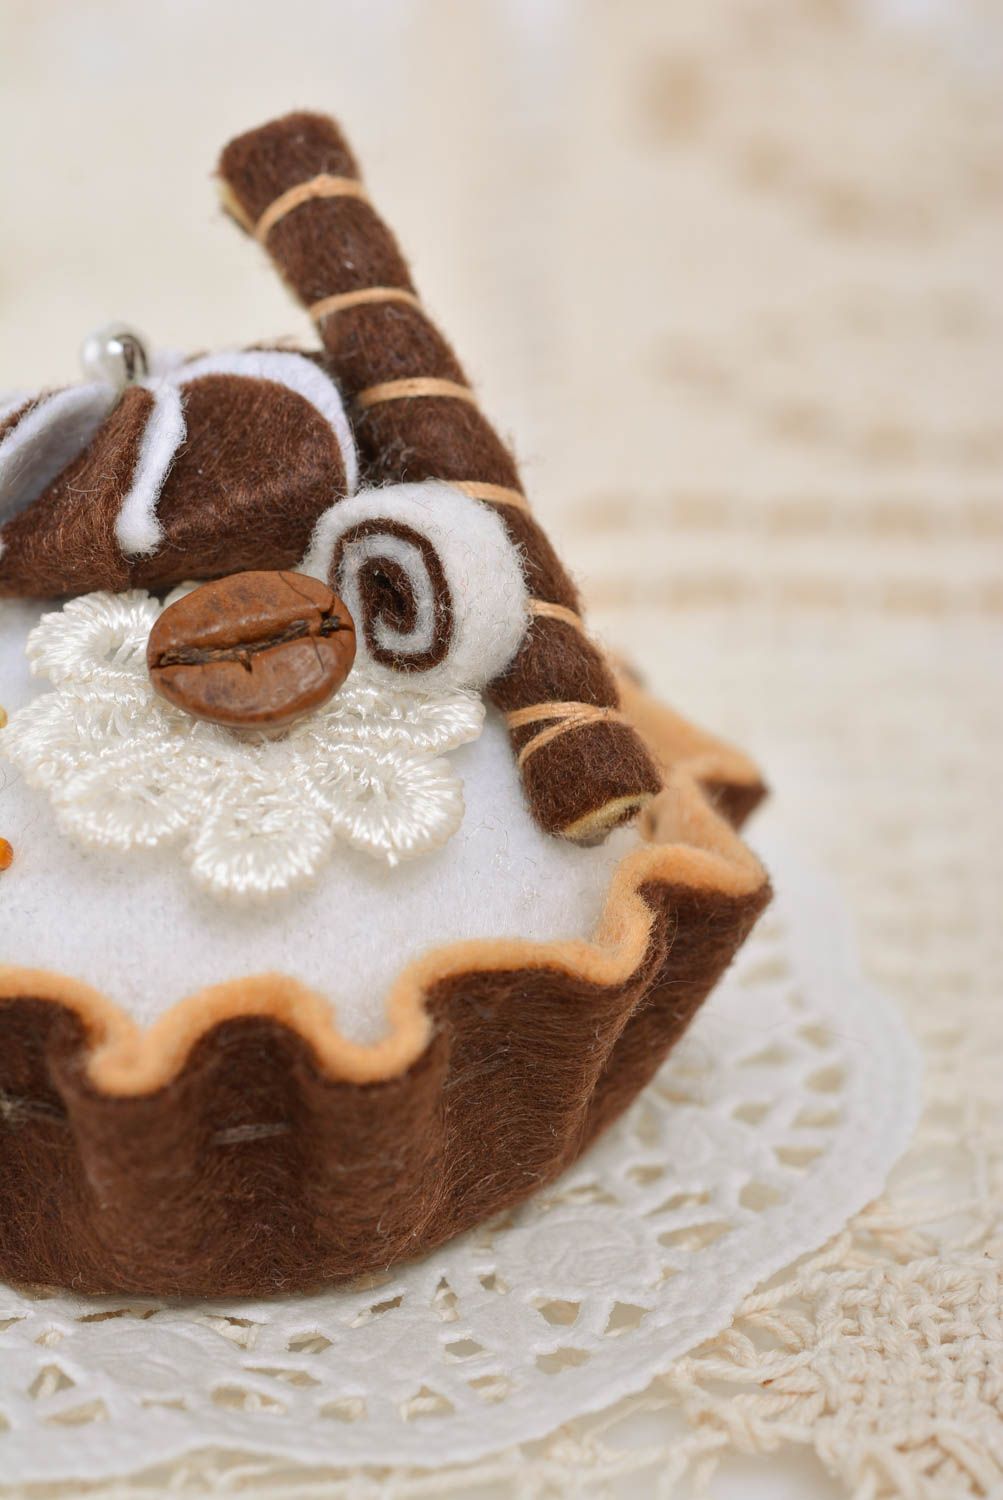 Handmade soft pincushion sewn of felt in the shape of chocolate cake with coffee photo 4